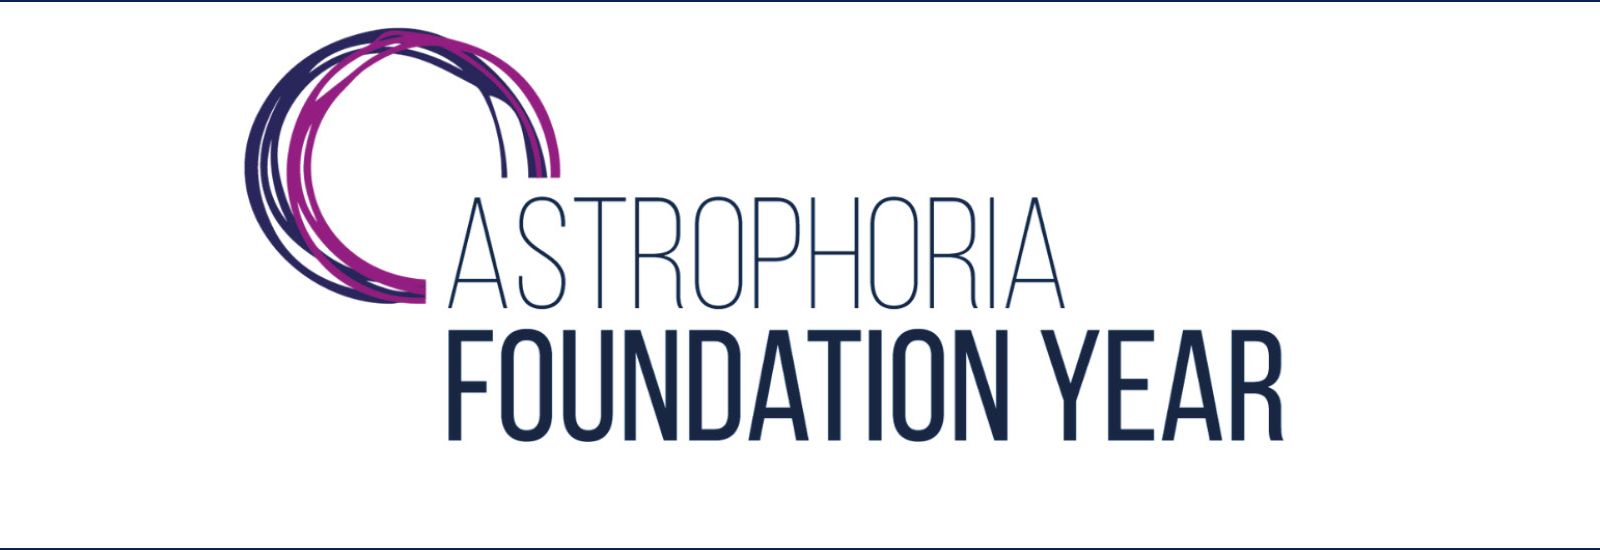 Astrophoria Foundation Year logo 